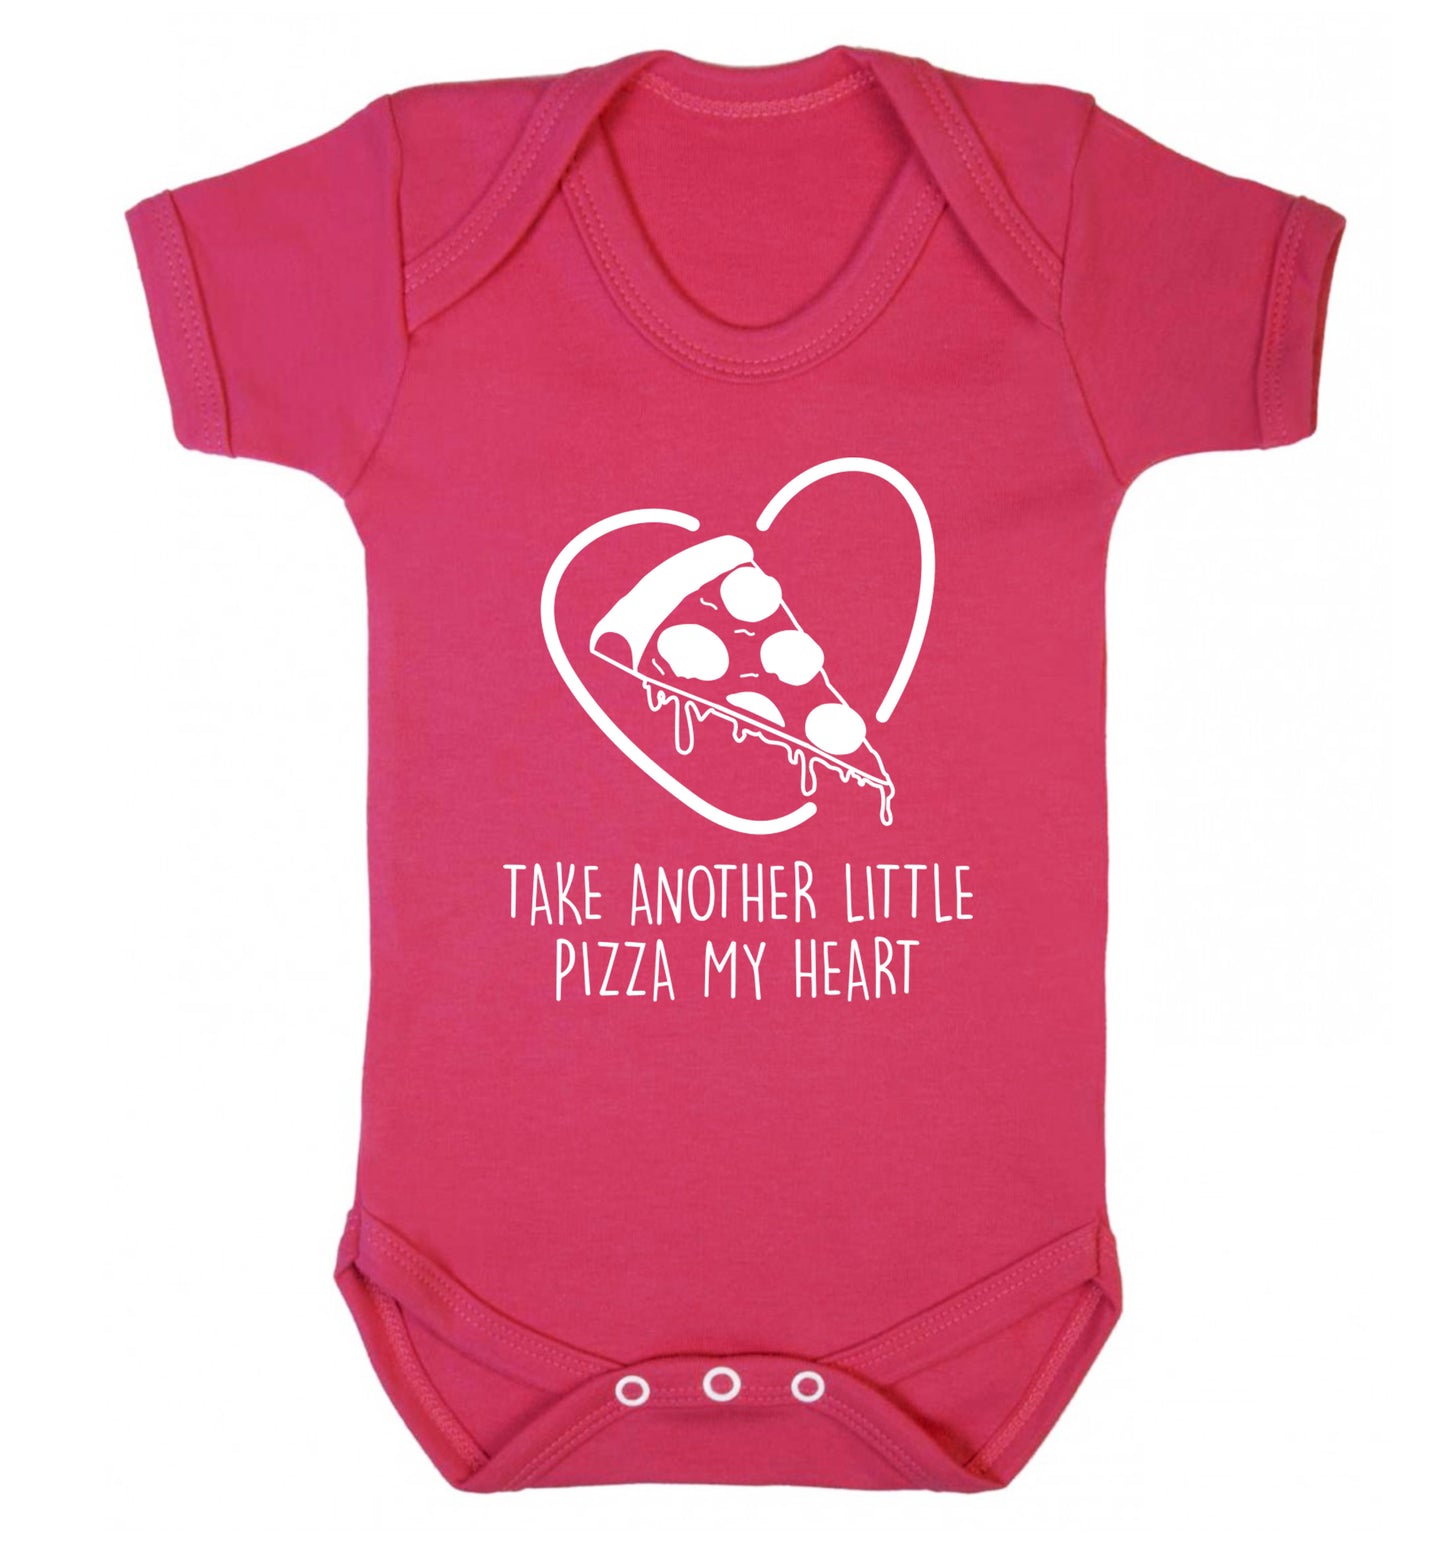 Take another little pizza my heart Baby Vest dark pink 18-24 months